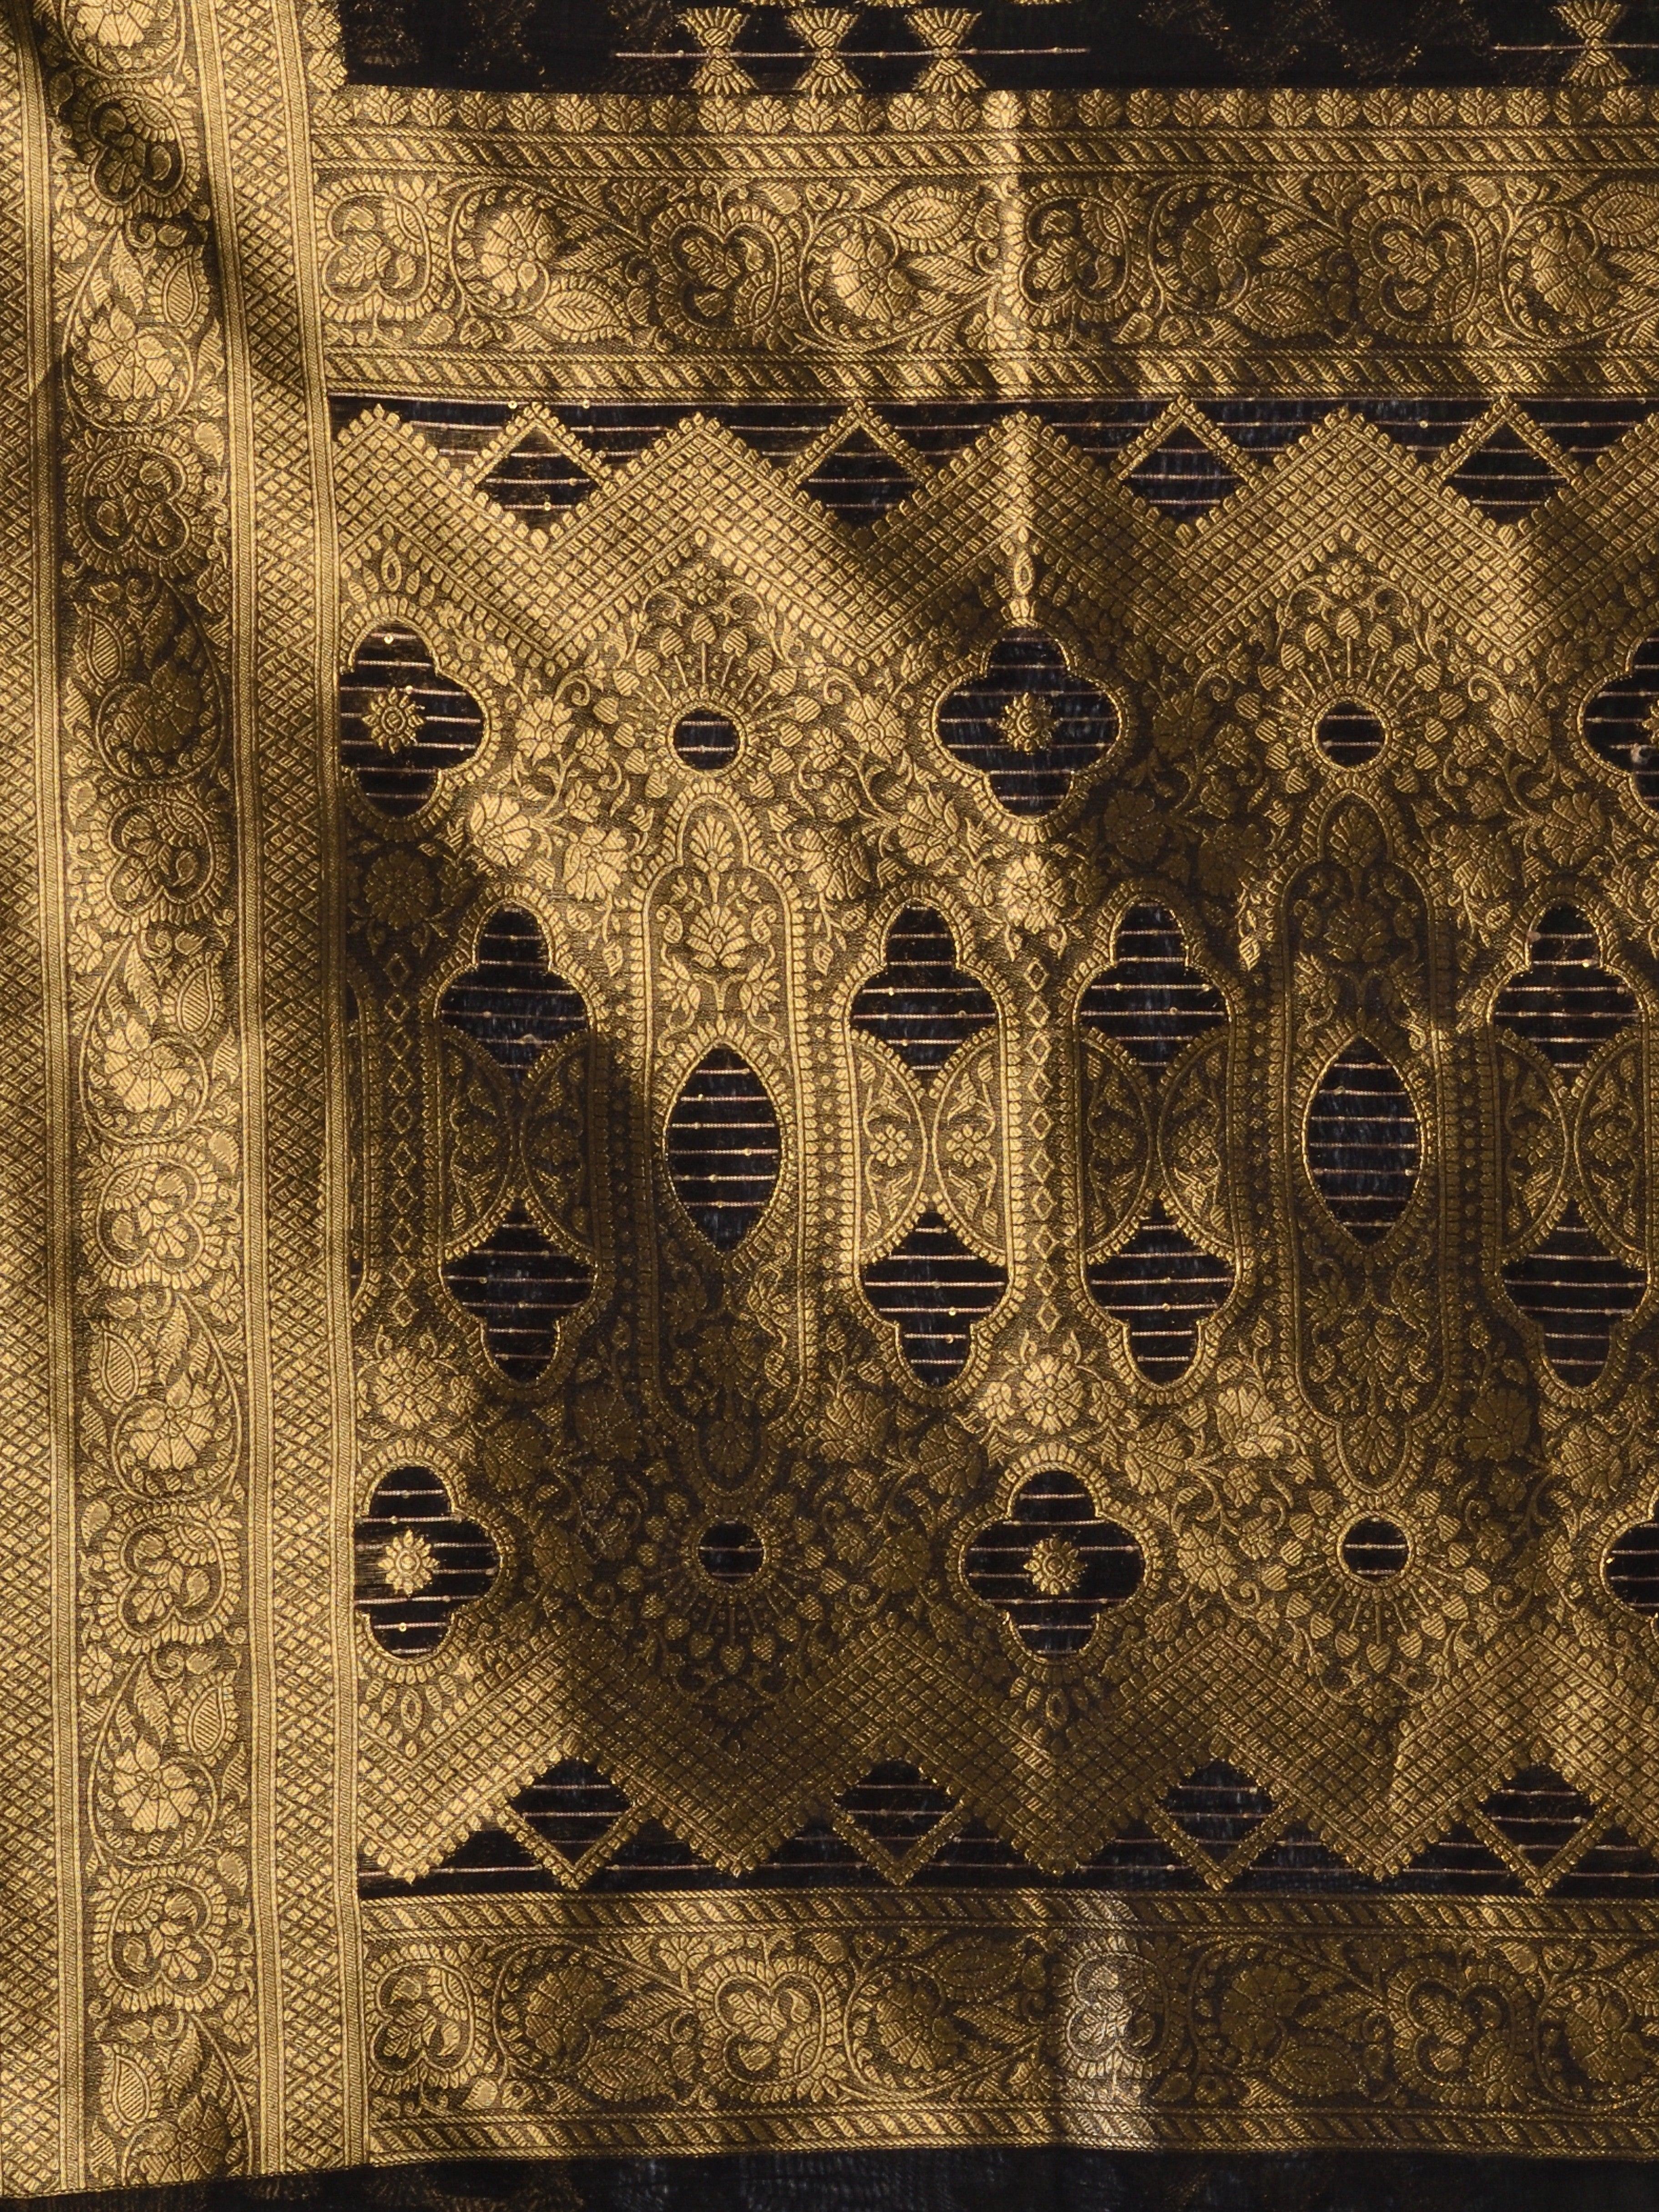 Kavvya Black Soft & Lightweight Kora Organza Weaving Silk Saree In Golden Zari - KAVVYA 